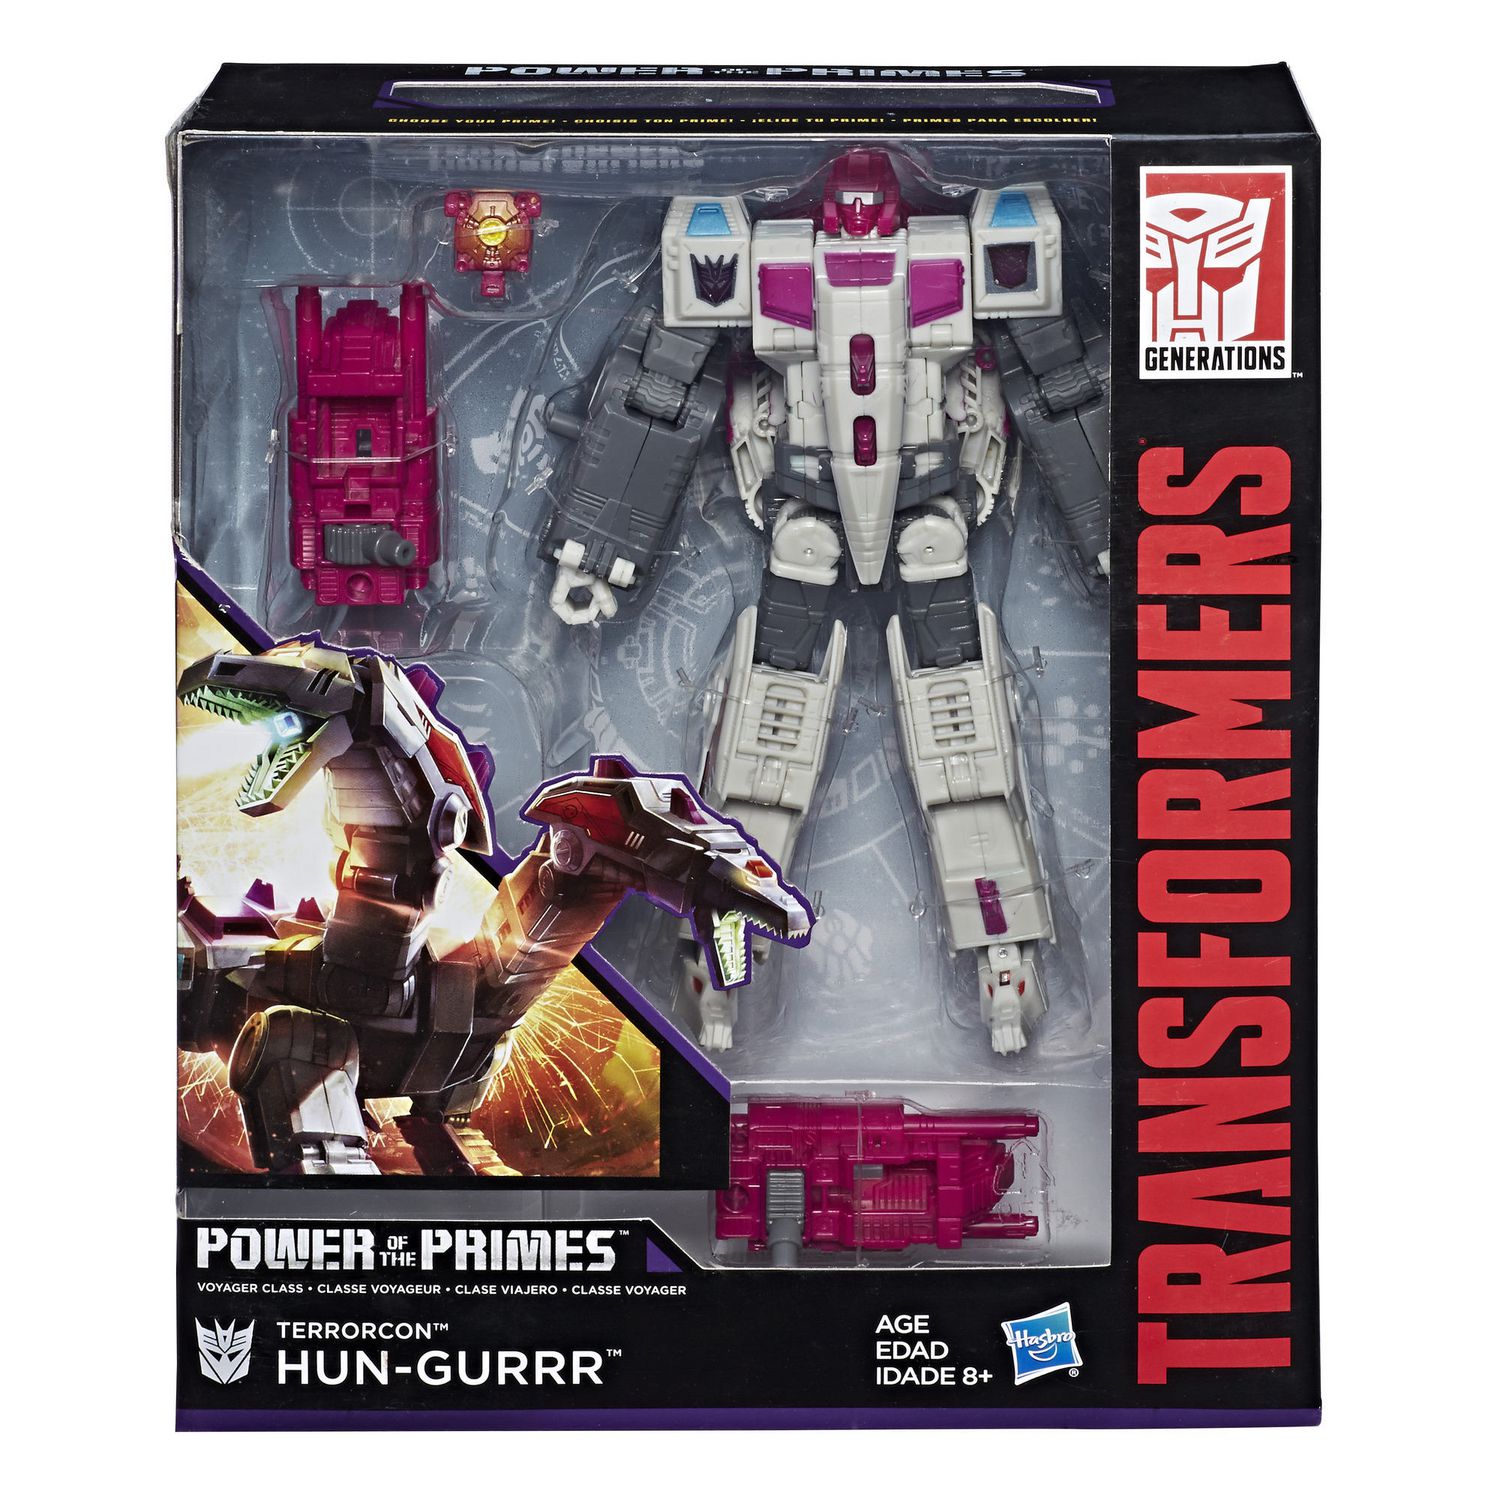 Transformers HUN-GURRR Power of the Primes Figure boy toy 